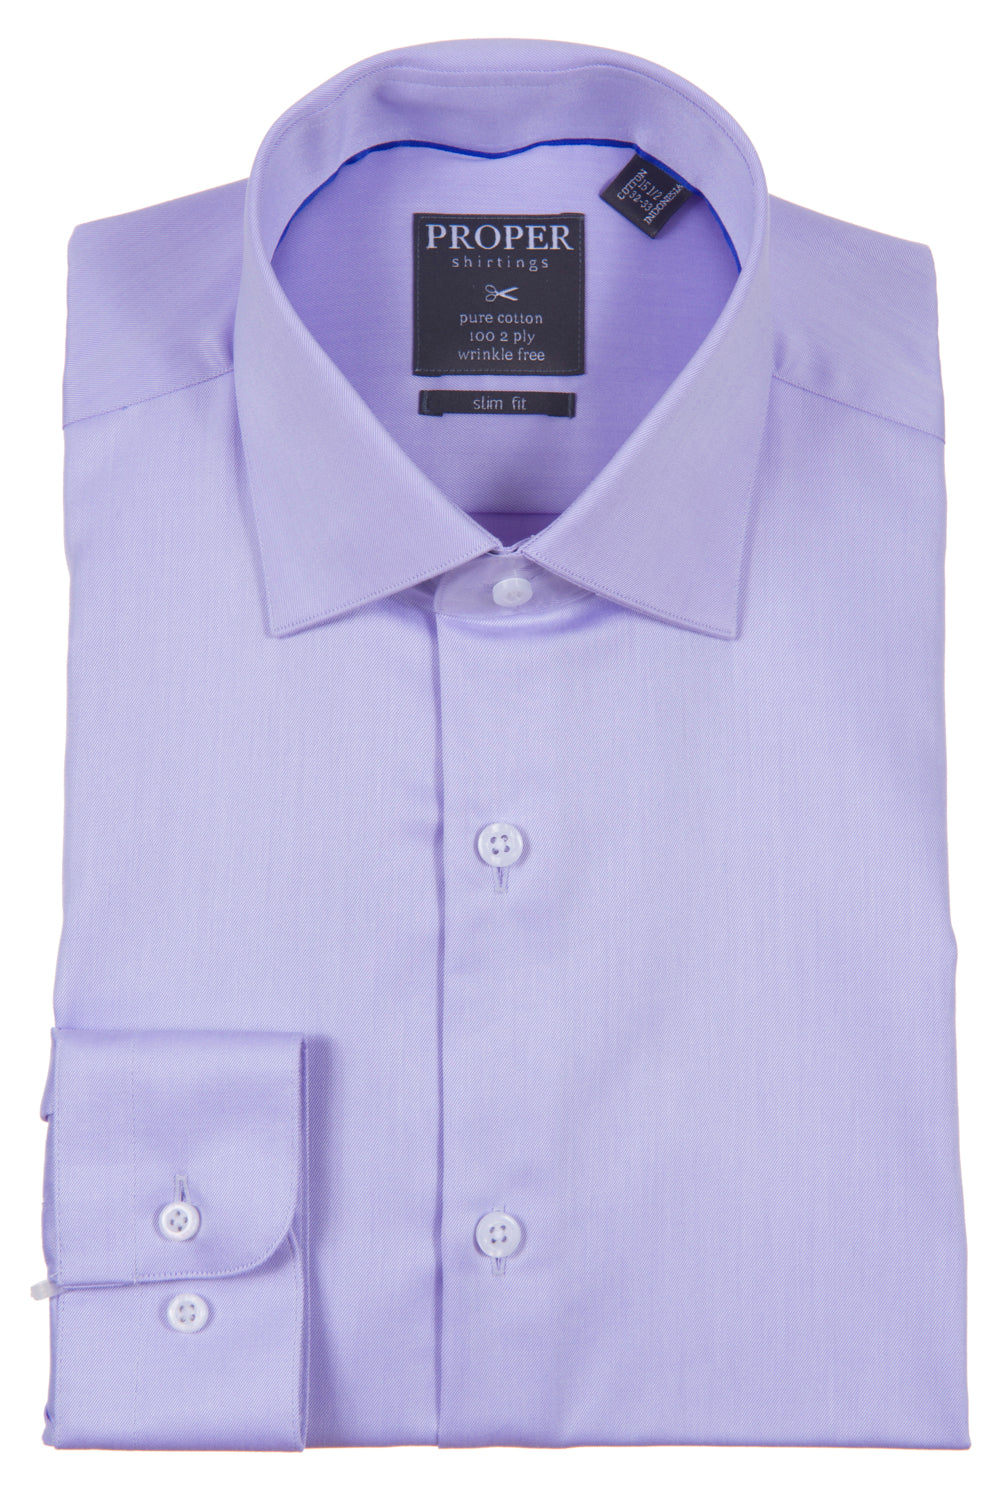 Proper Shirtings - Lavender -100% Cotton - 100's 2-ply - Wrinkle Free - Dress Shirt - Slim Fit